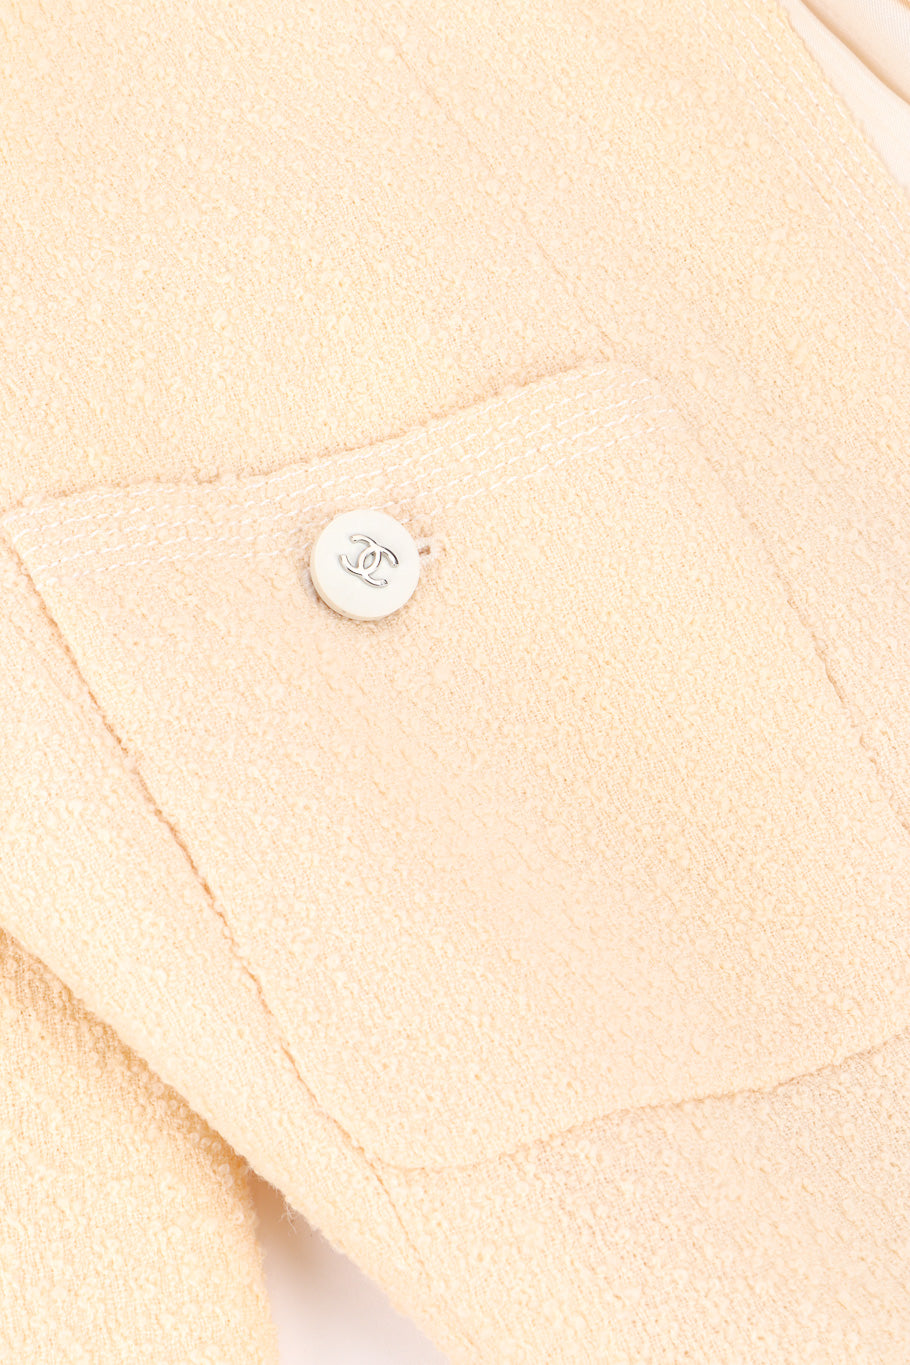 Chanel Knit Bouclé Jacket and Skirt Set pocket closeup @recessla